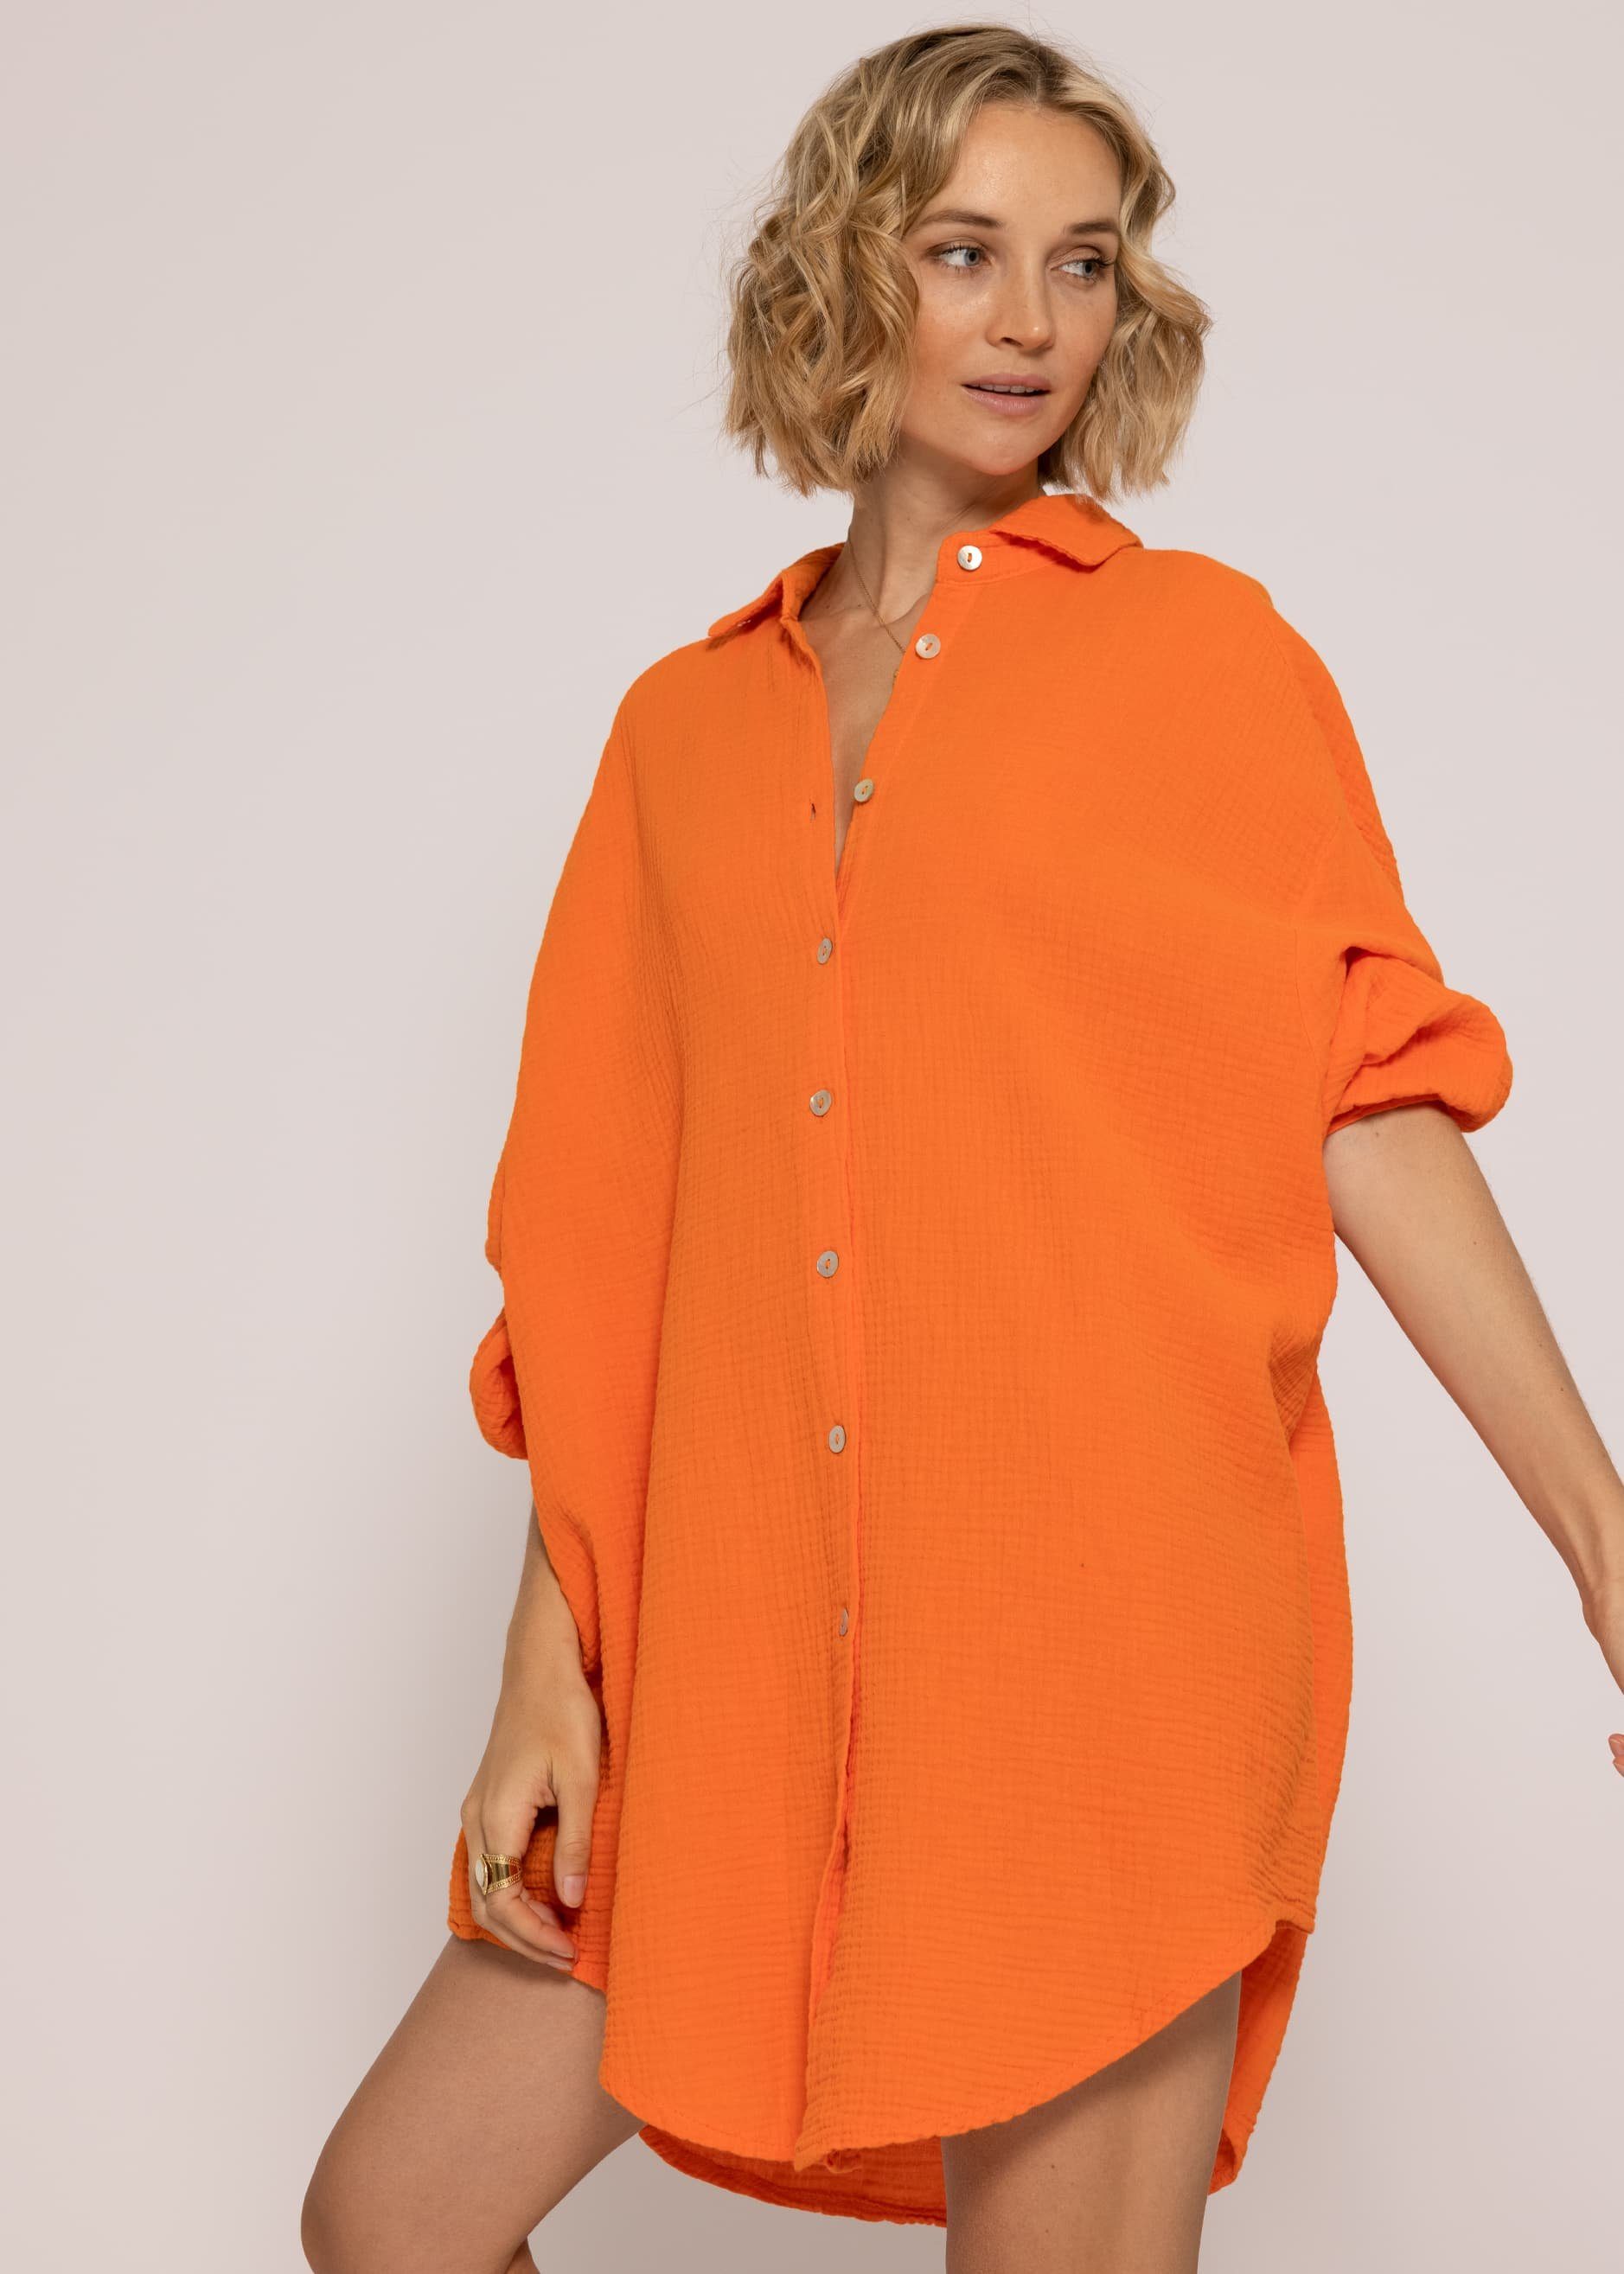 SASSYCLASSY Longbluse Oversize Musselin Bluse Damen Langarm Hemdbluse lang aus Baumwolle mit V-Ausschnitt, One Size (Gr. 36-48) Orange | Blusen